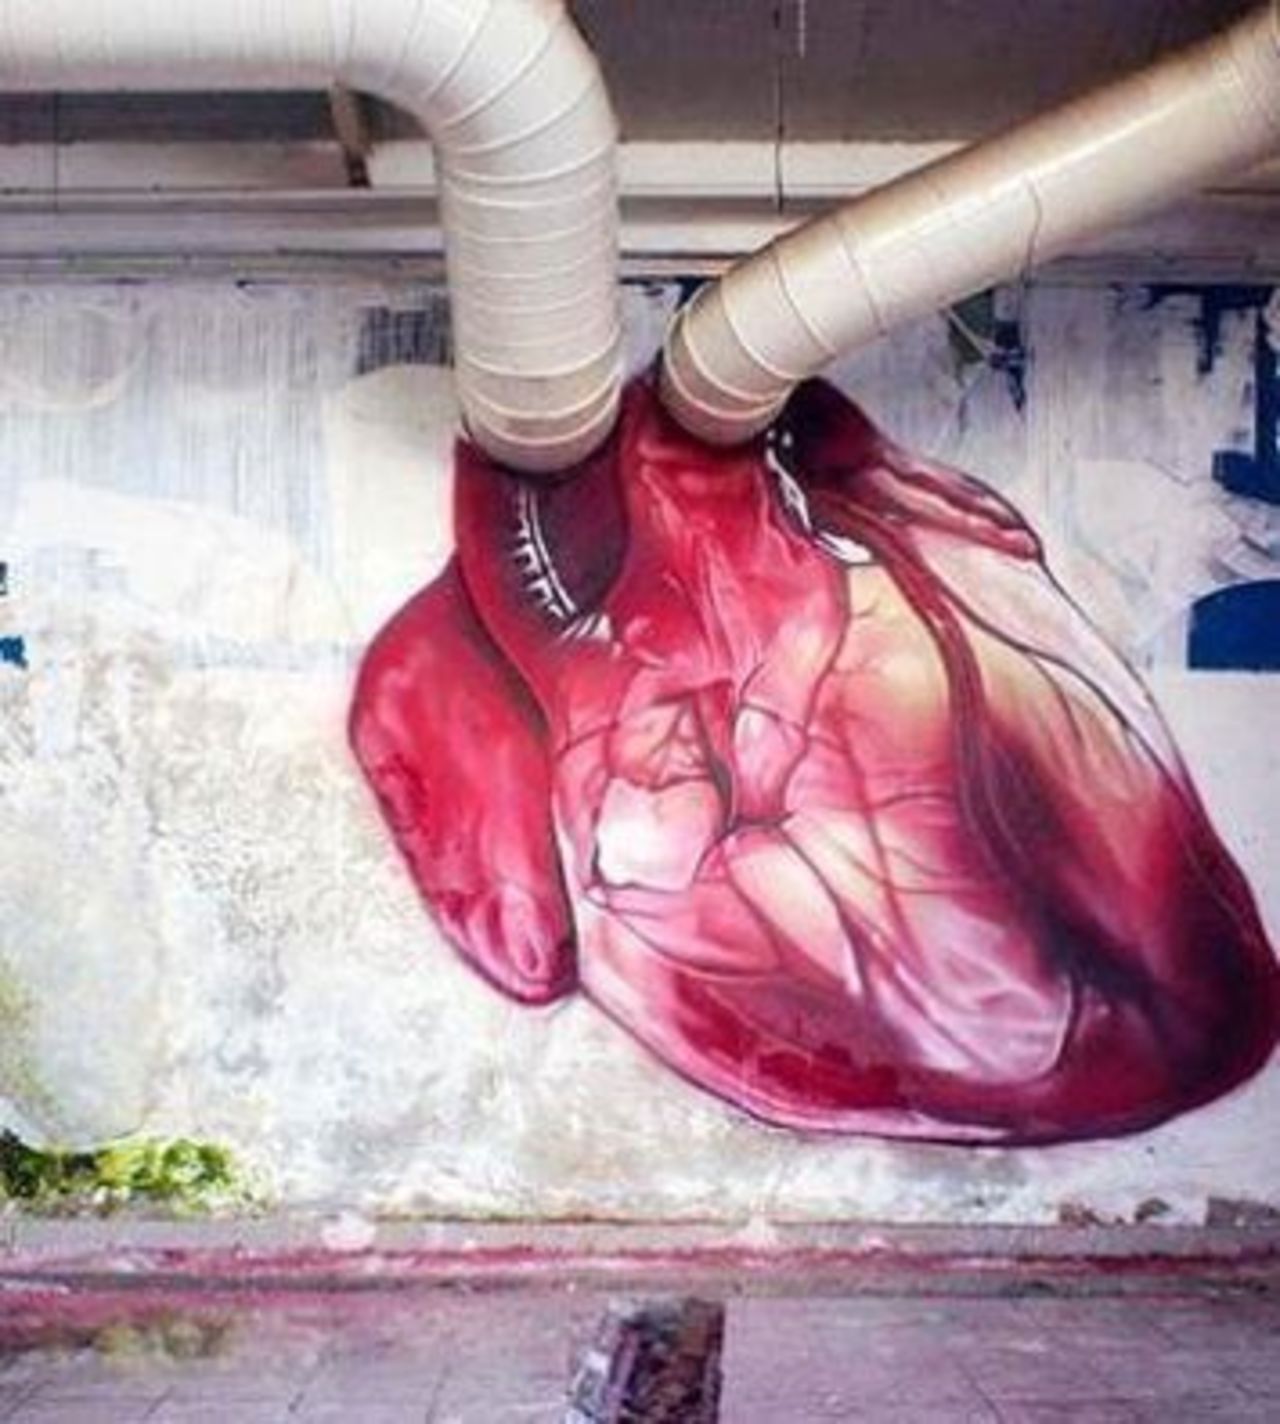 #Heart – Creative #Streetart | Be ▲rtist - Be ▲rt https://beartistbeart.com/2016/08/22/heart-creative-streetart/?utm_campaign=crowdfire&utm_content=crowdfire&utm_medium=social&utm_source=twitter https://t.co/4EcGidQeoW